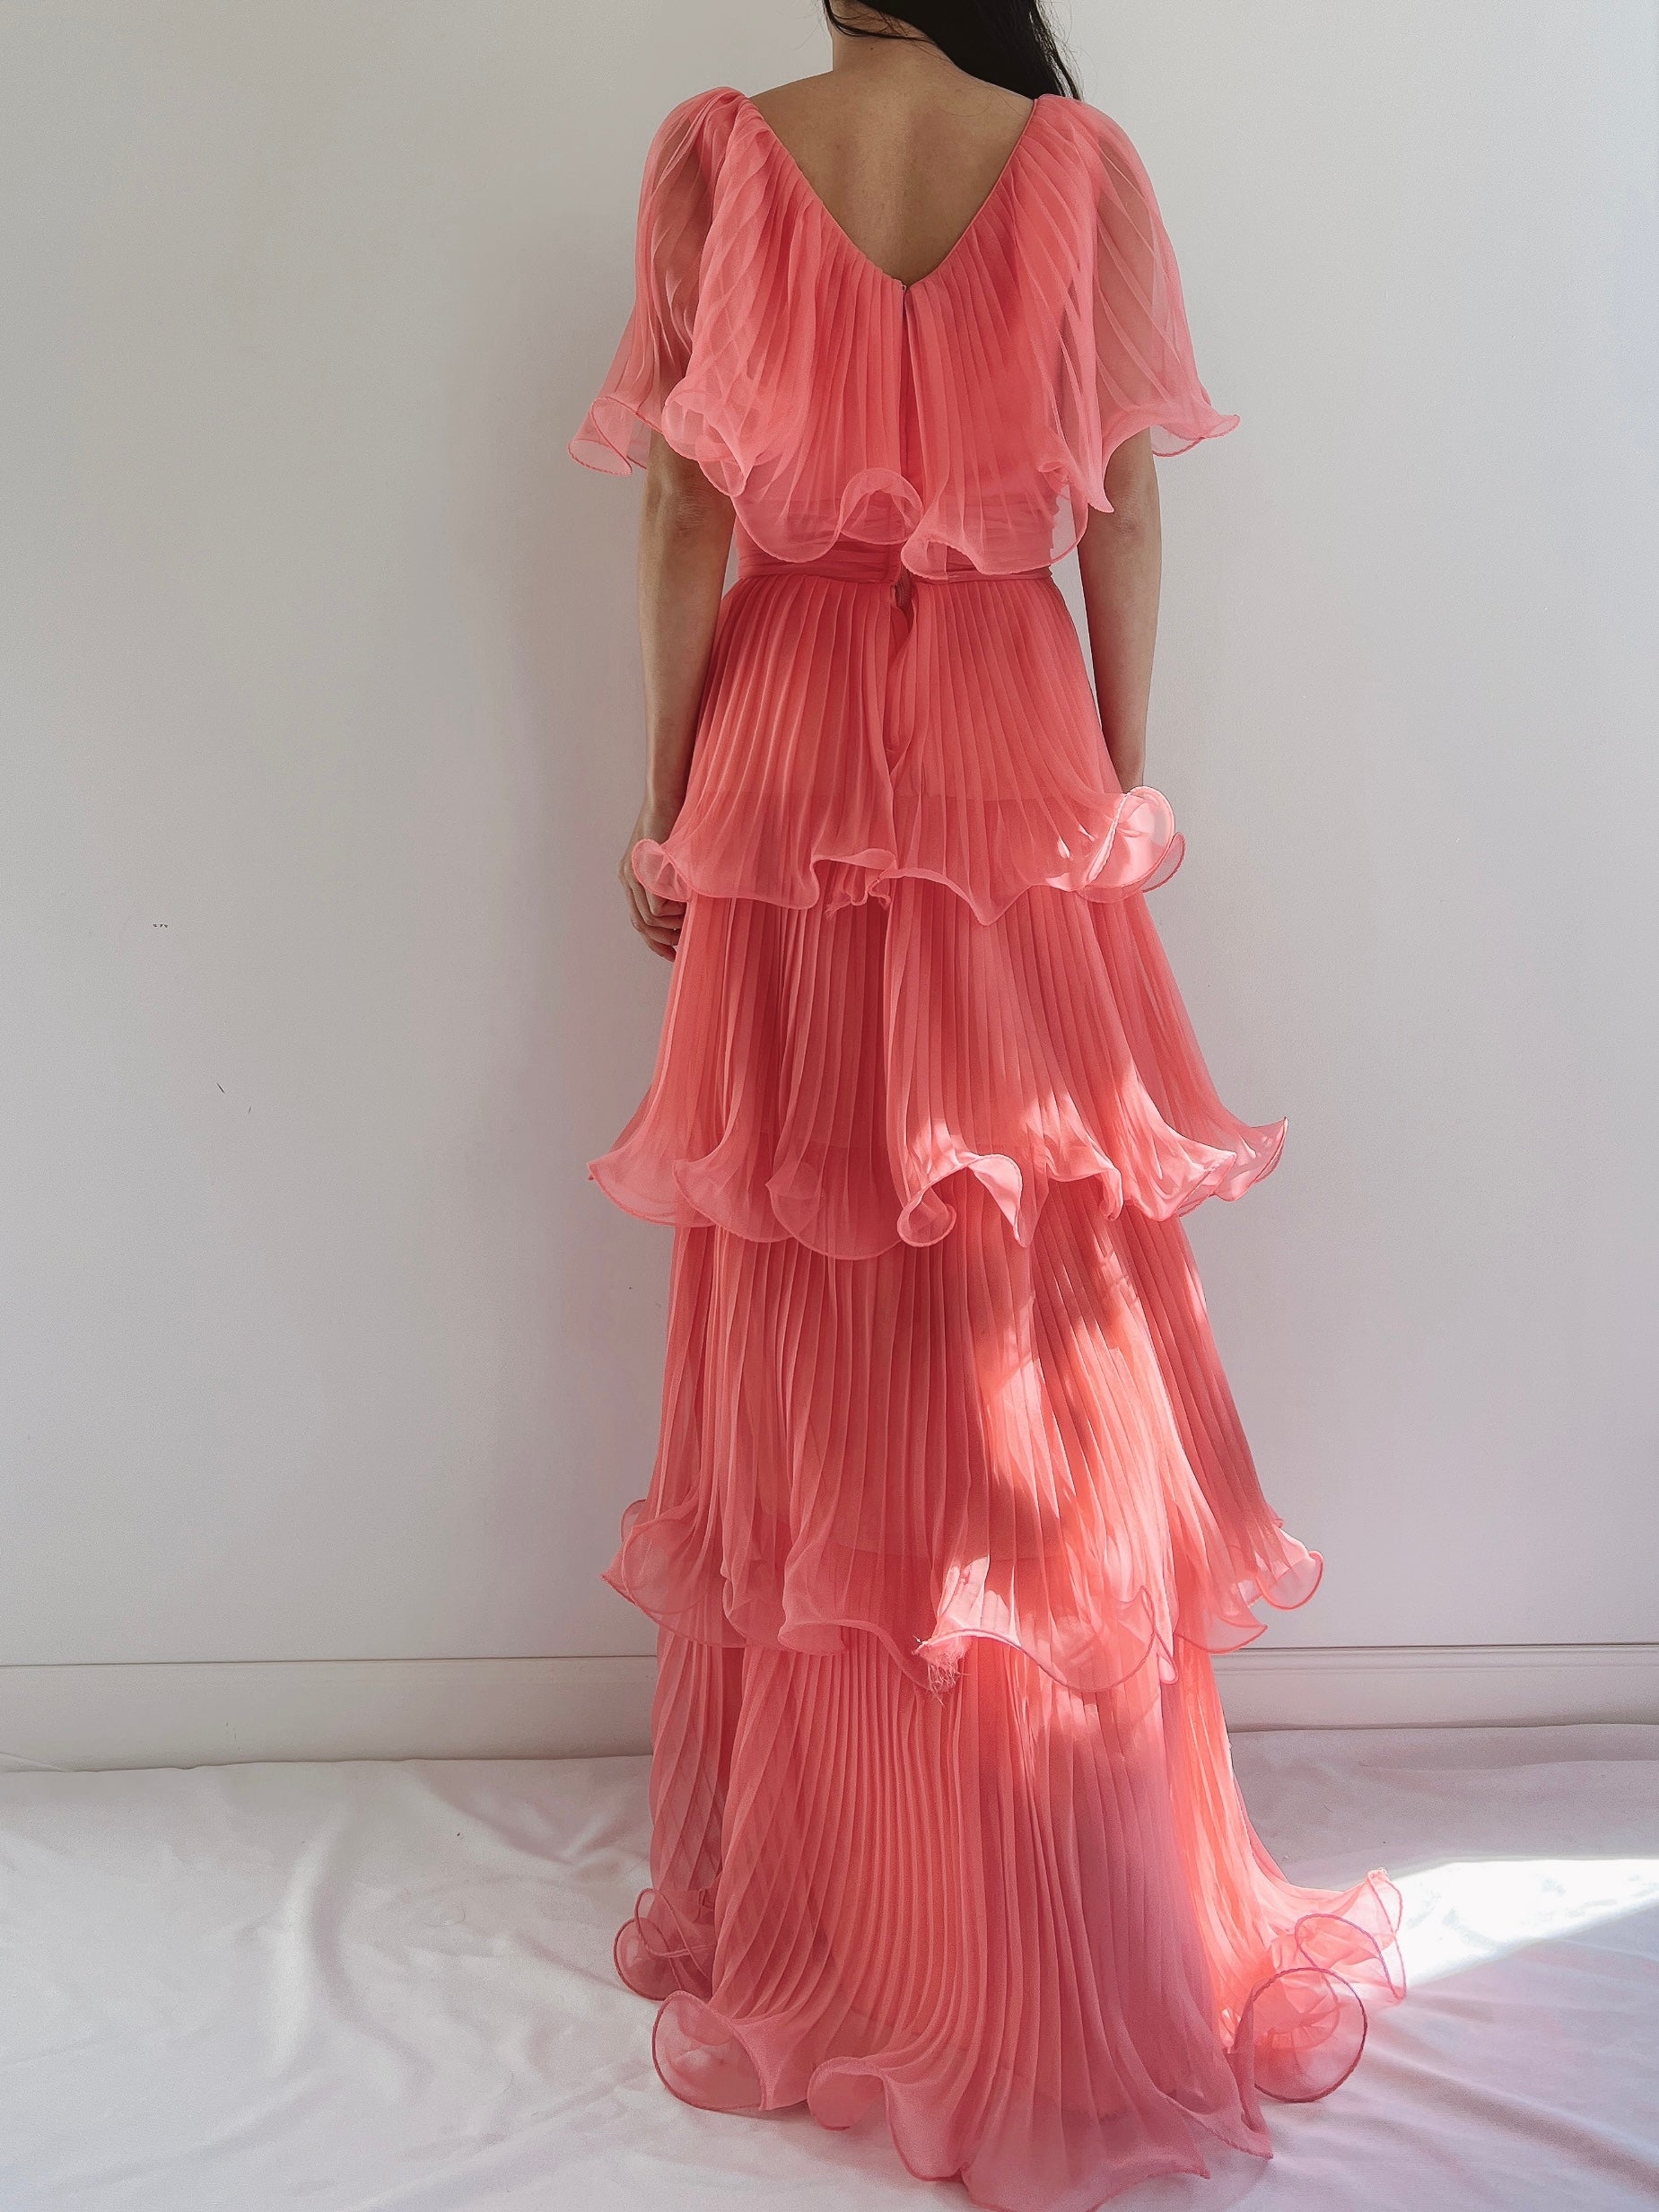 1970s Coral Pleated Chiffon Dress - S